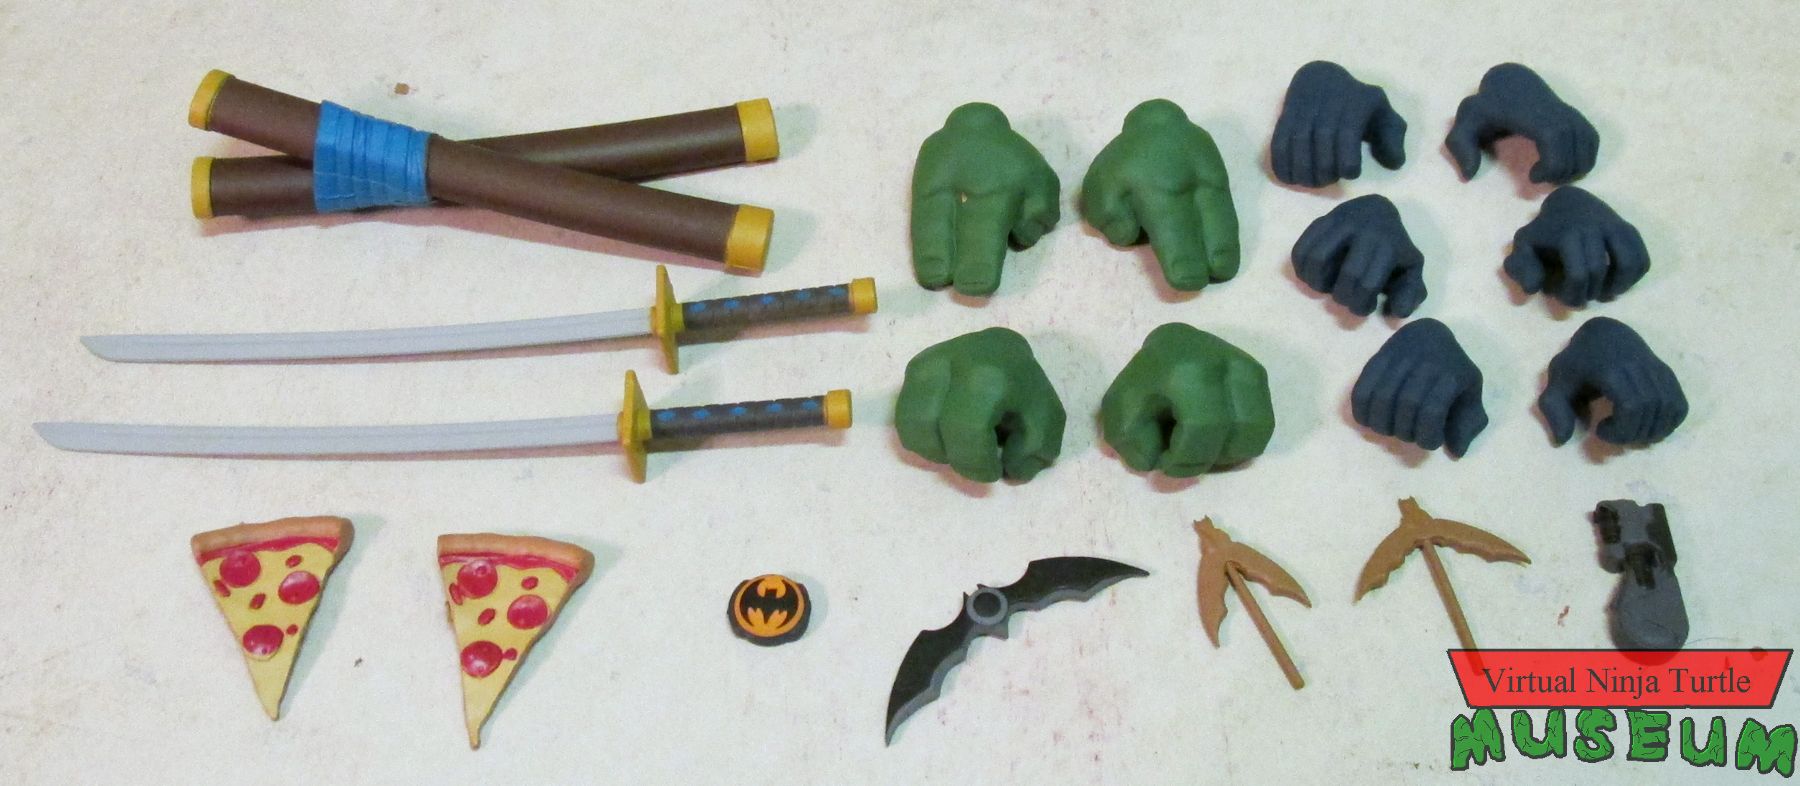 Batman & Leonardo accessories